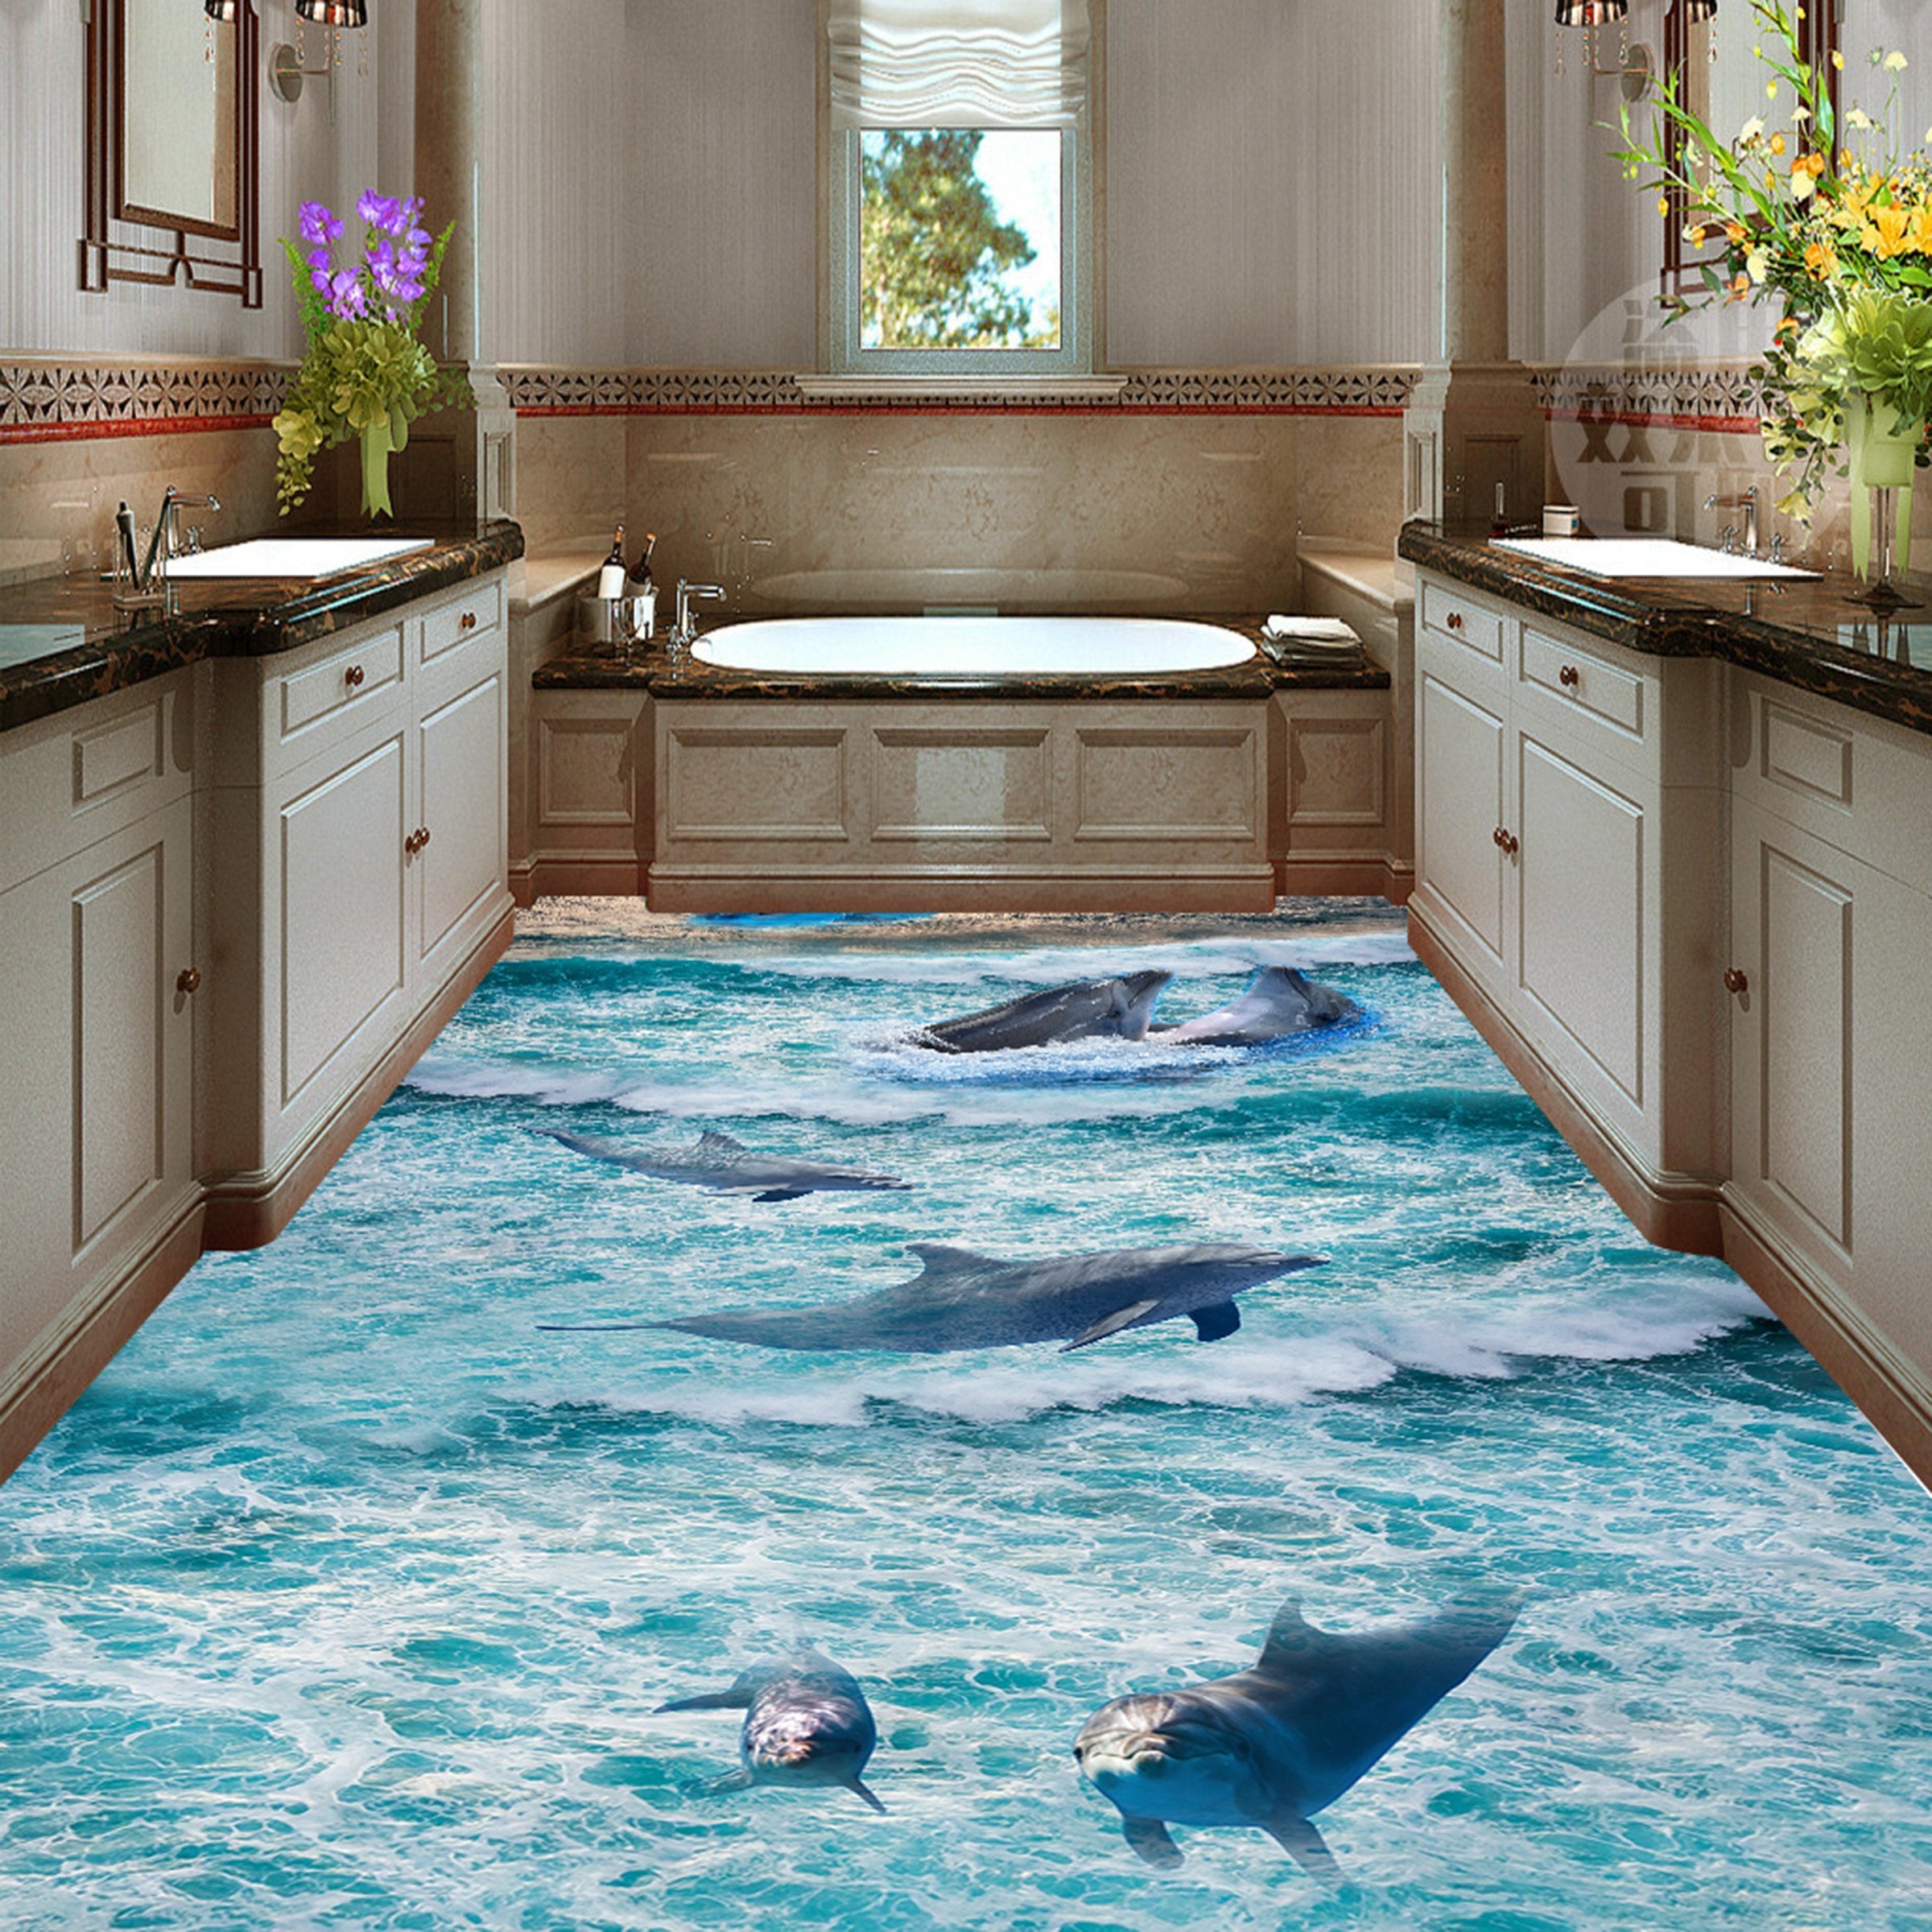 3D Cute Dolphin WG471 Floor Mural Wallpaper AJ Wallpaper 2 